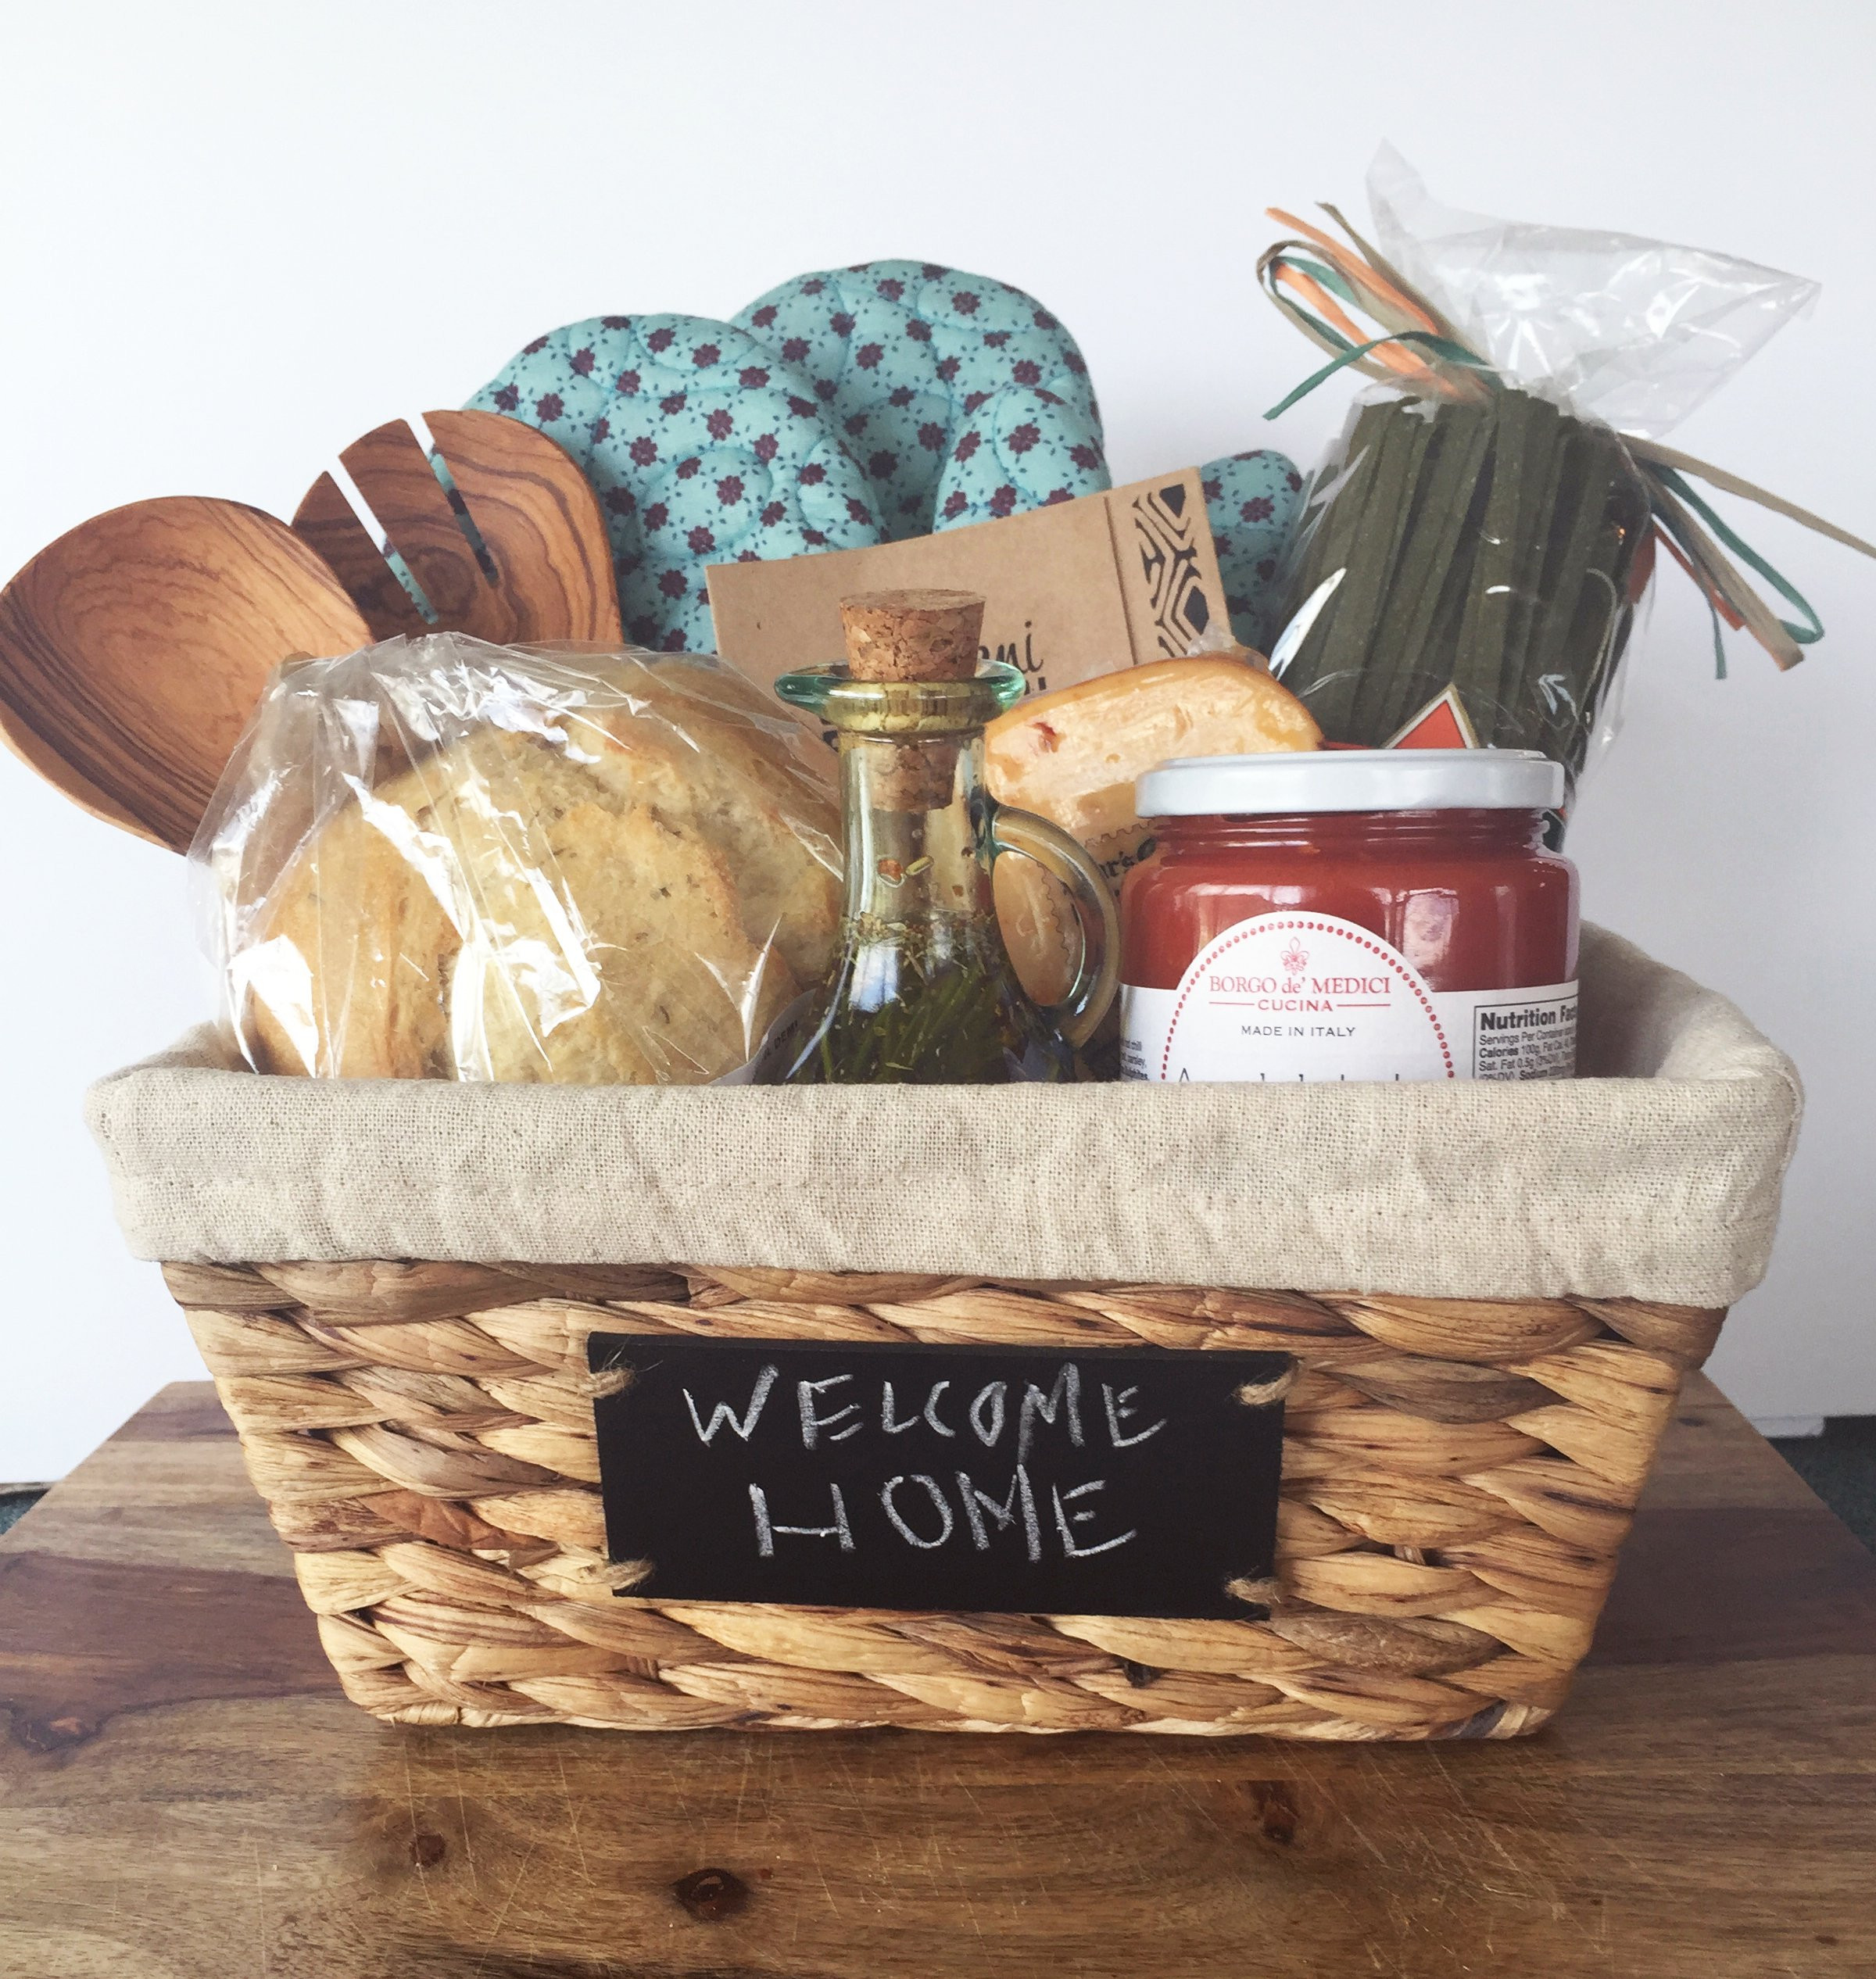 Homemade Housewarming Gift Basket Ideas
 DIY HOUSEWARMING GIFT BASKET T A S T Y S O U T H E R N